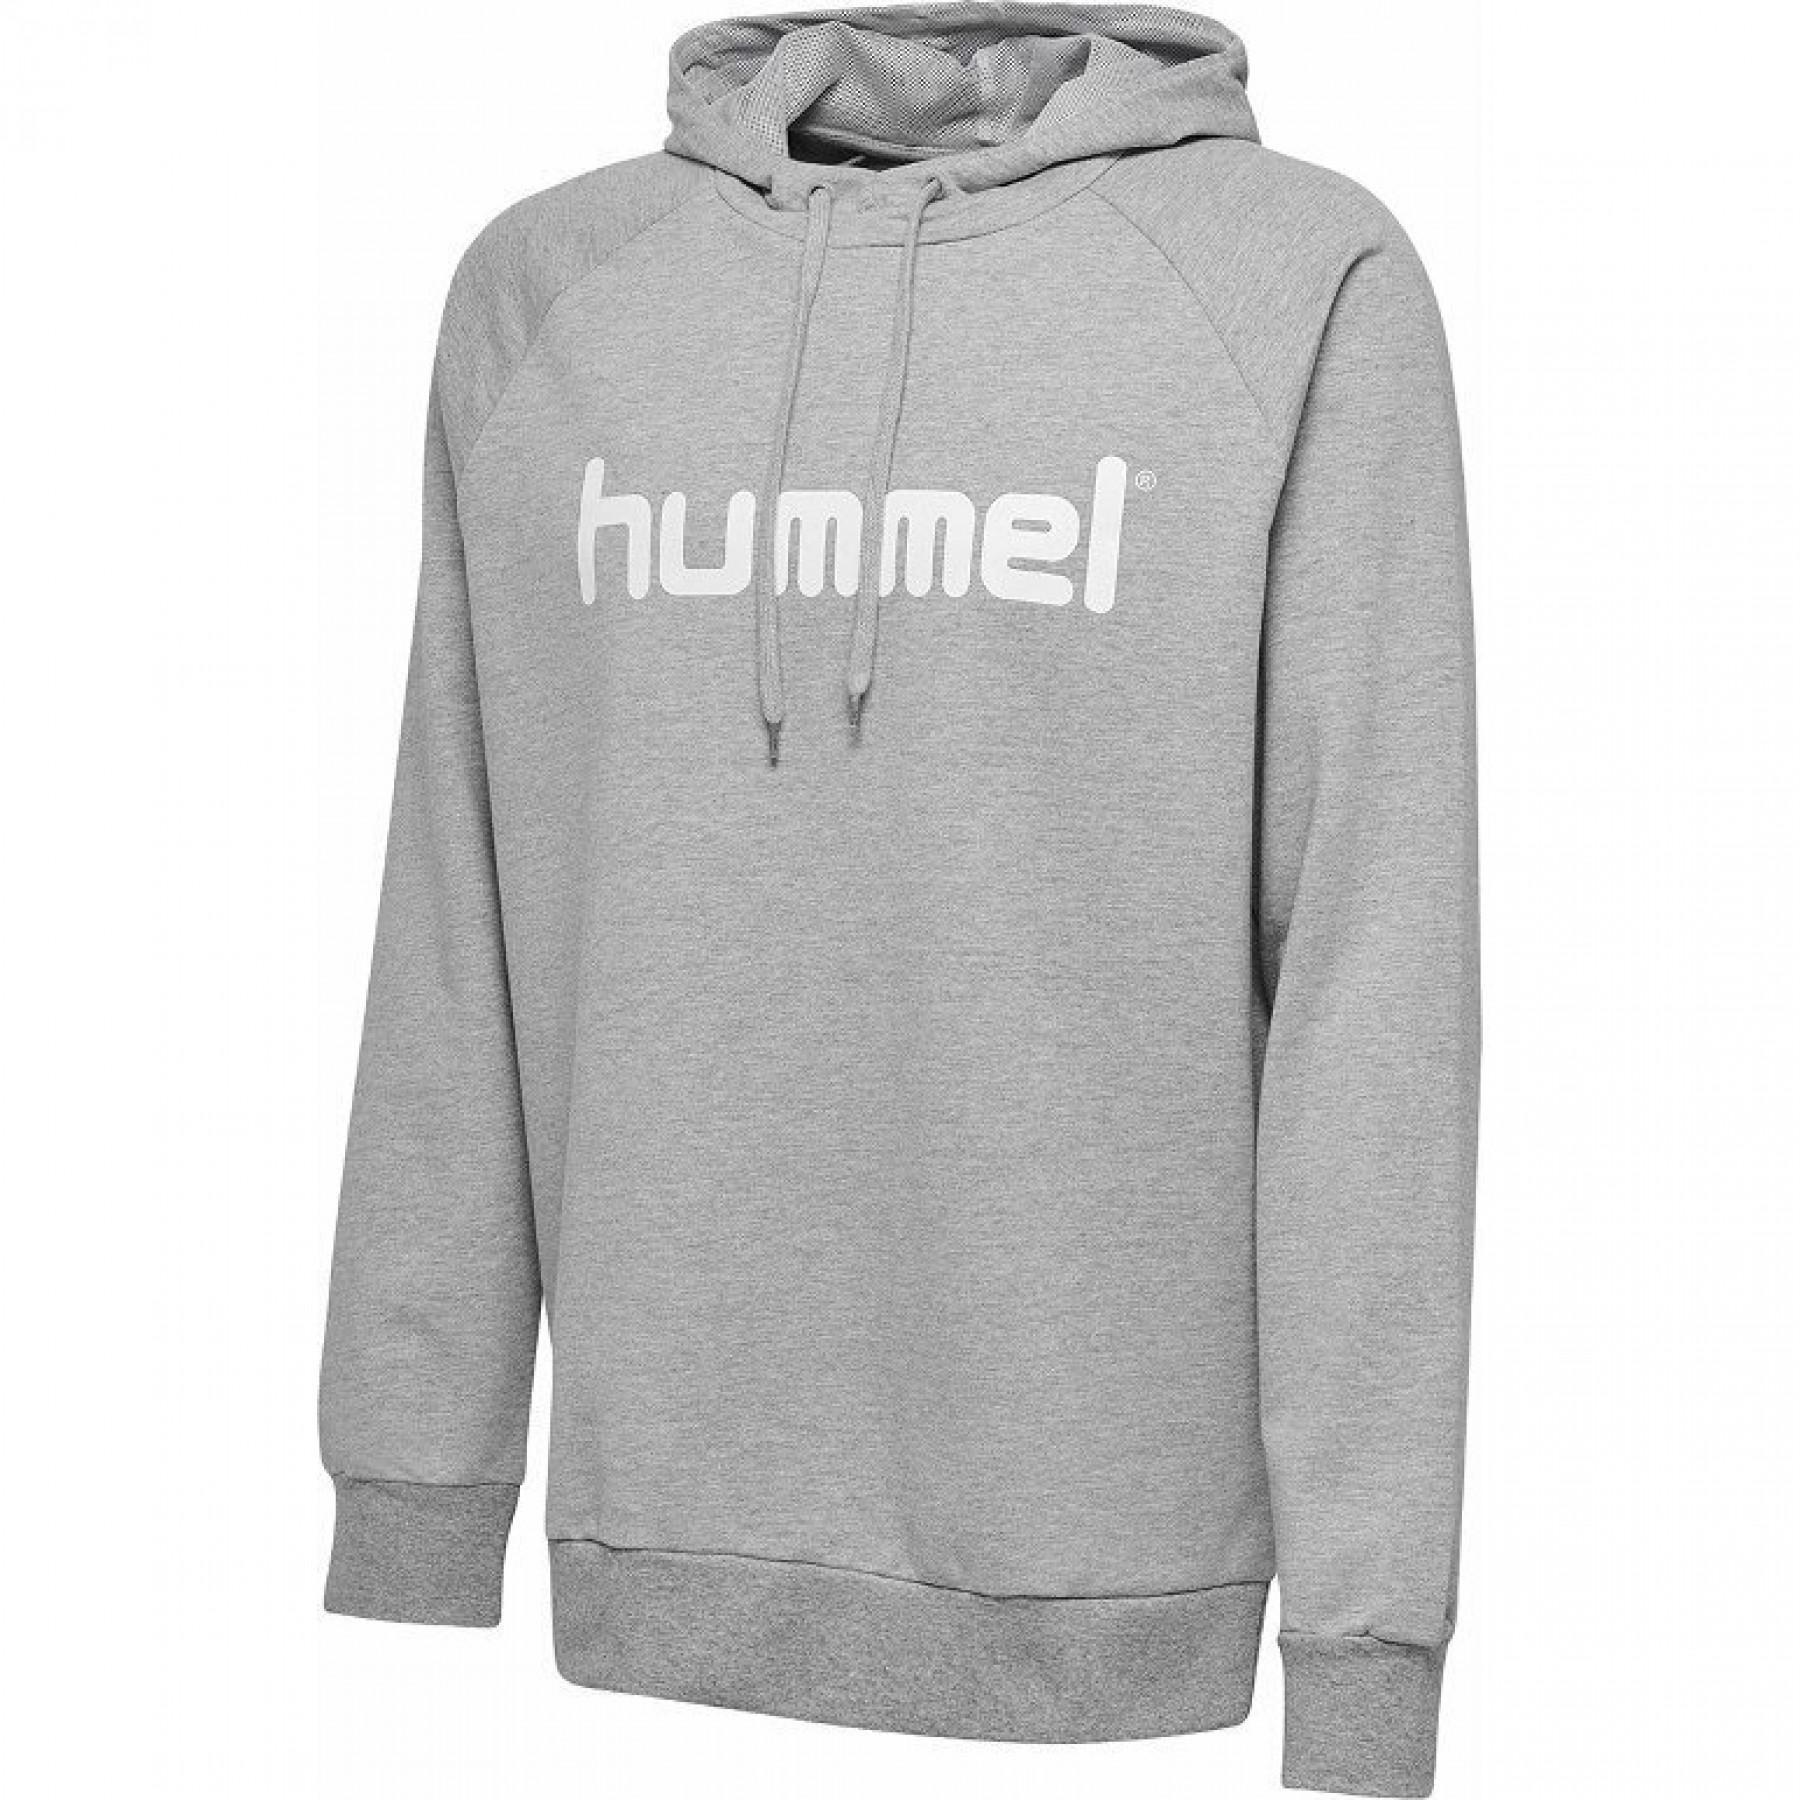 Sudadera con capucha Hummel hmlgo cotton logo